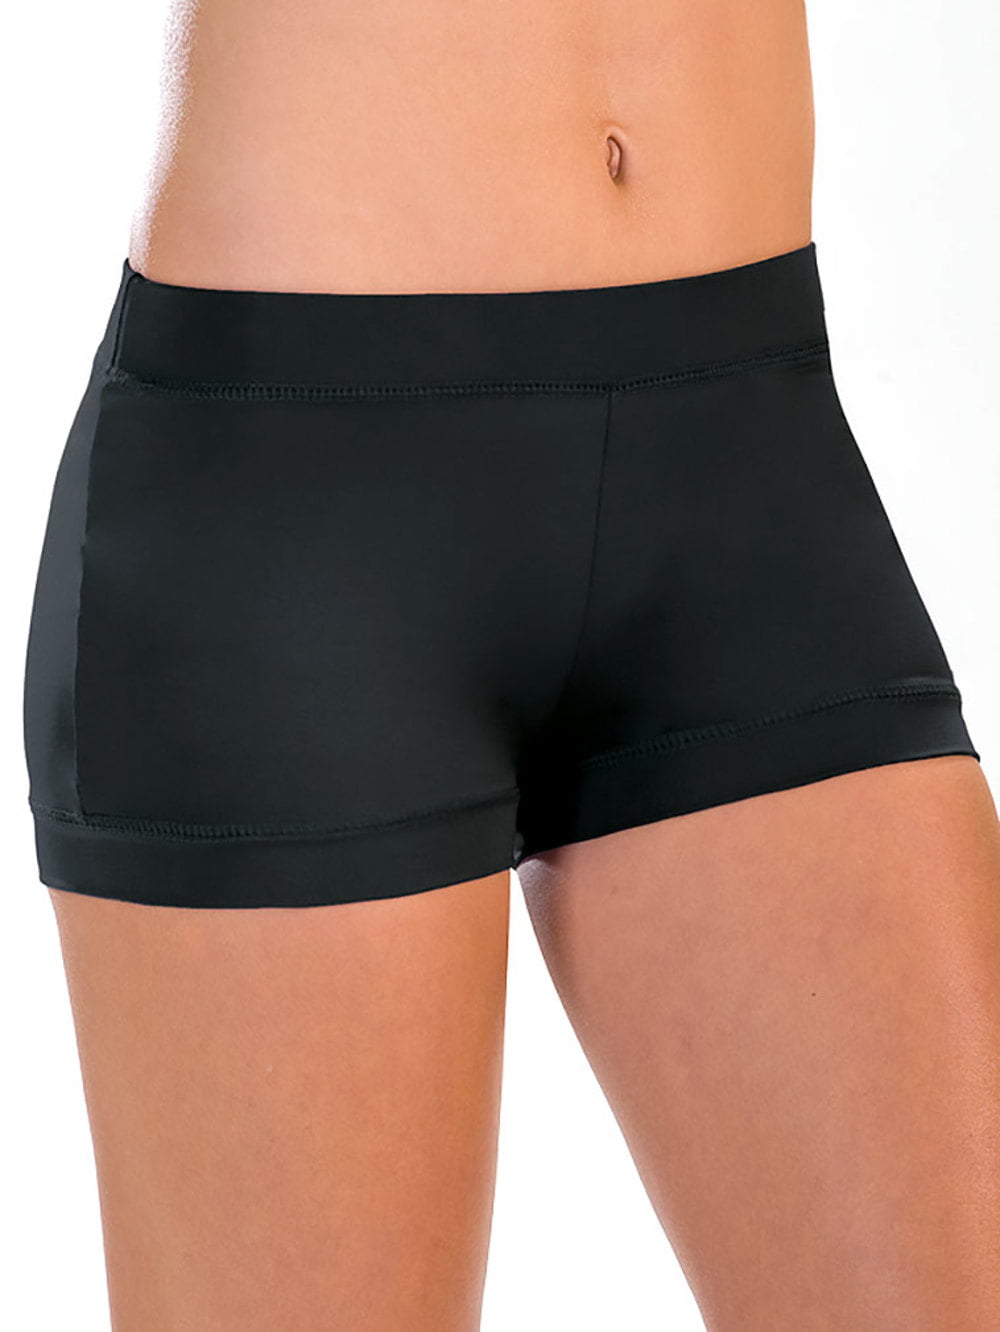 Motionwear Women's Banded Leg Boy Cut Shorts S BLACK - Walmart.com